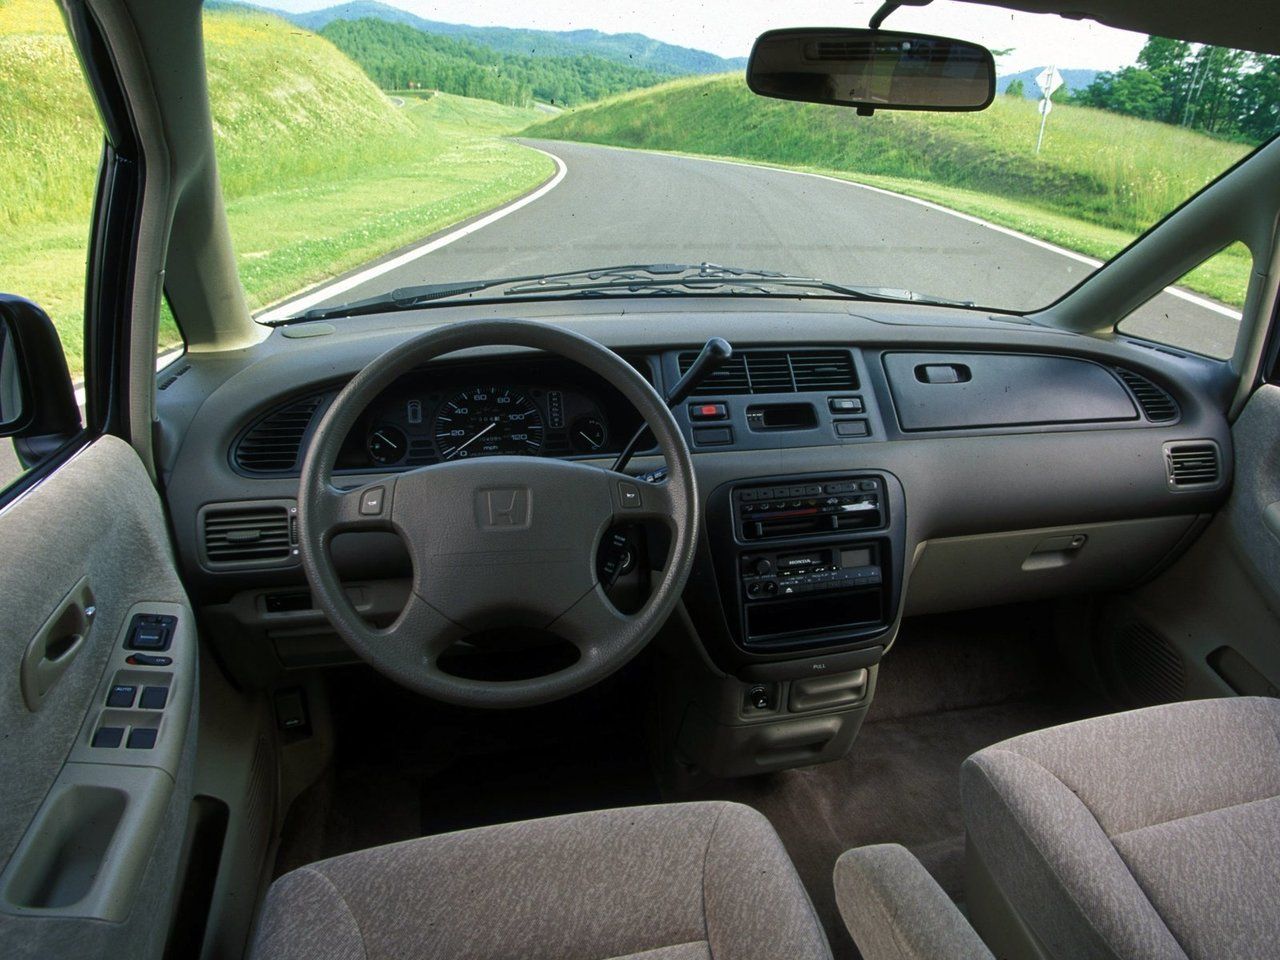 Honda odyssey 1995 interior